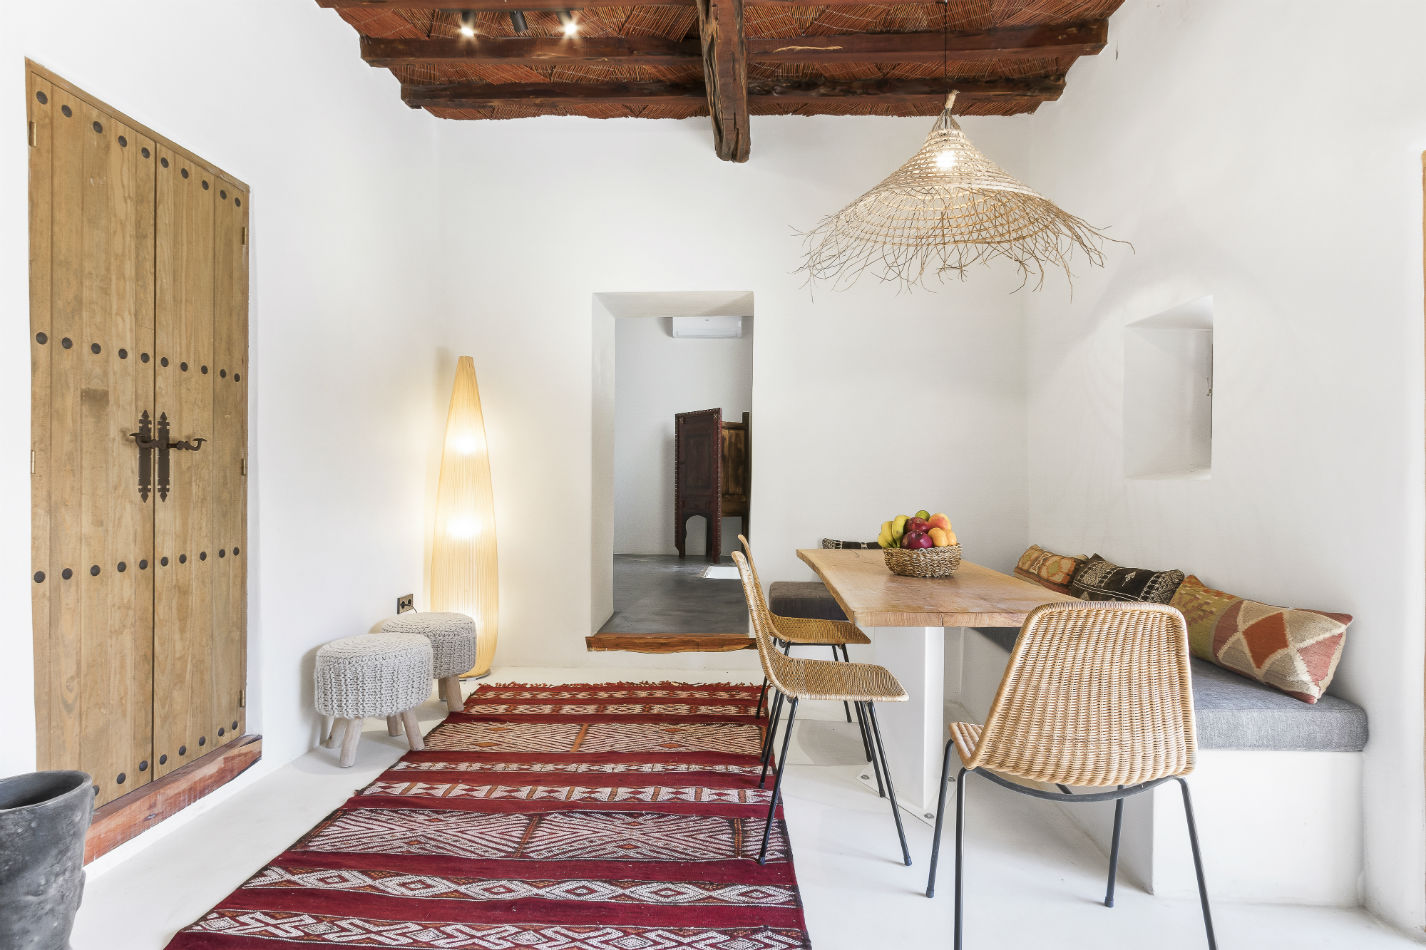 Finca Rural Luxus Ferienhaus Ibiza Mieten Detail Esszimmer